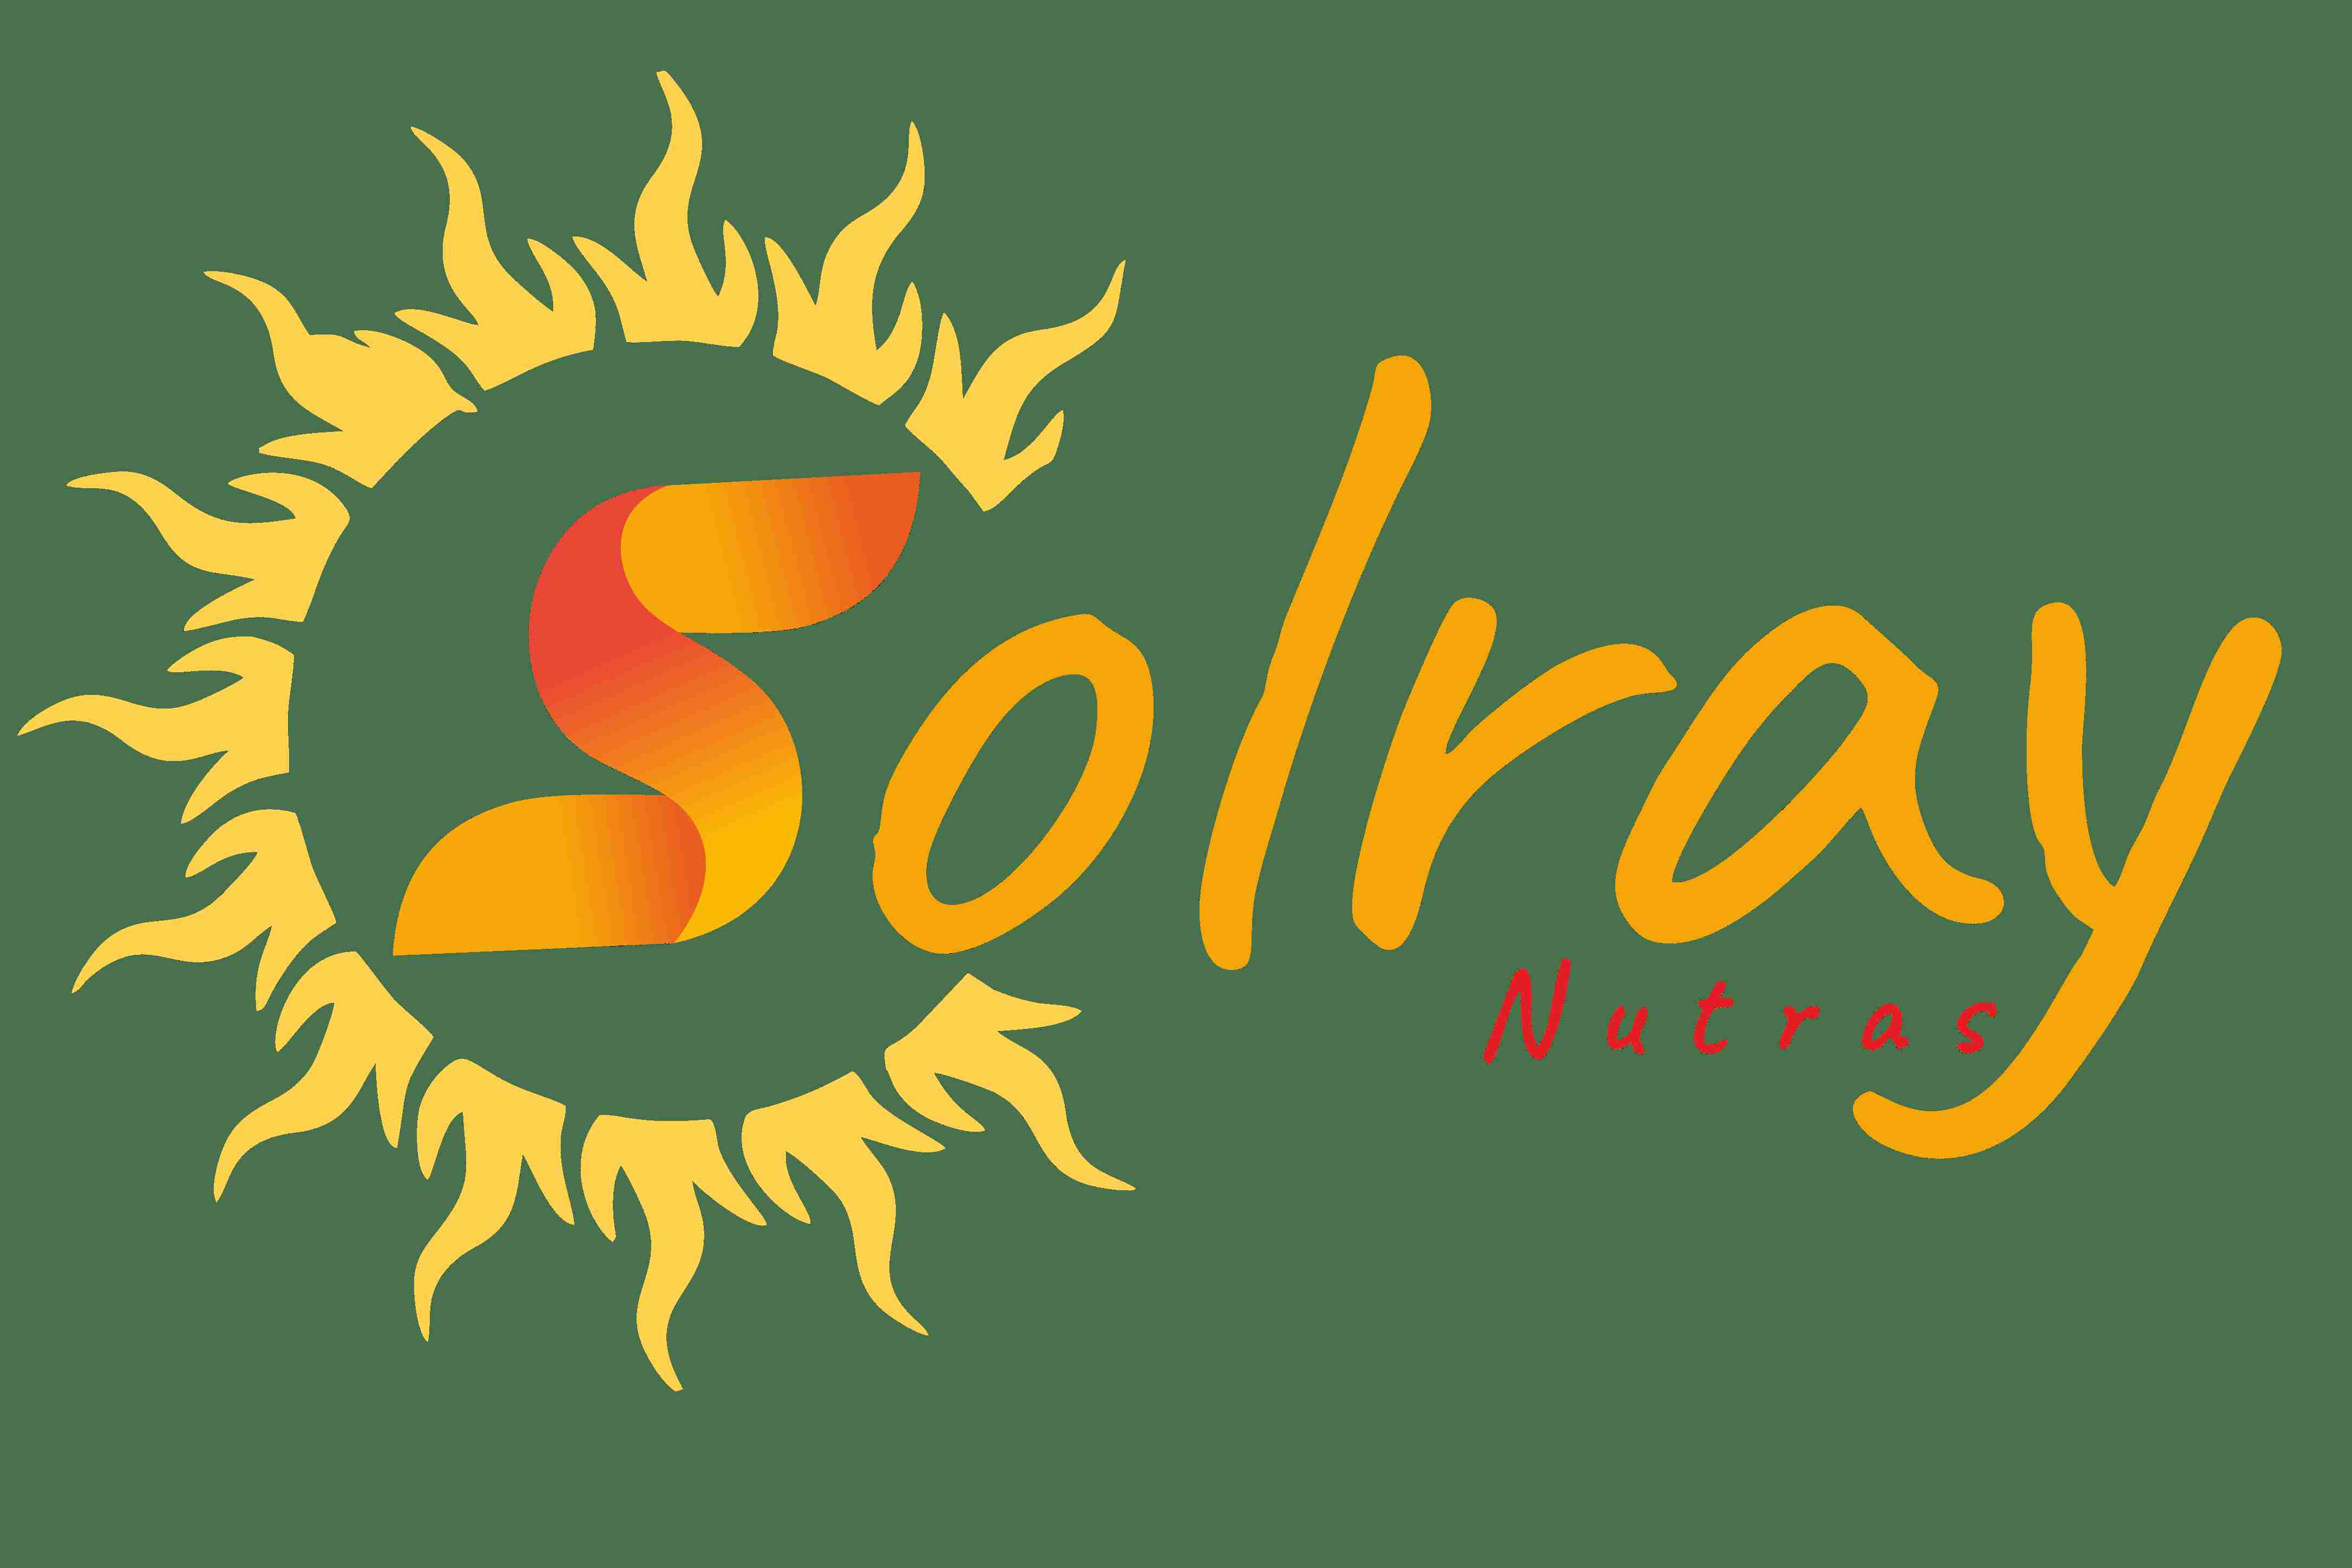 Solraynutras Business